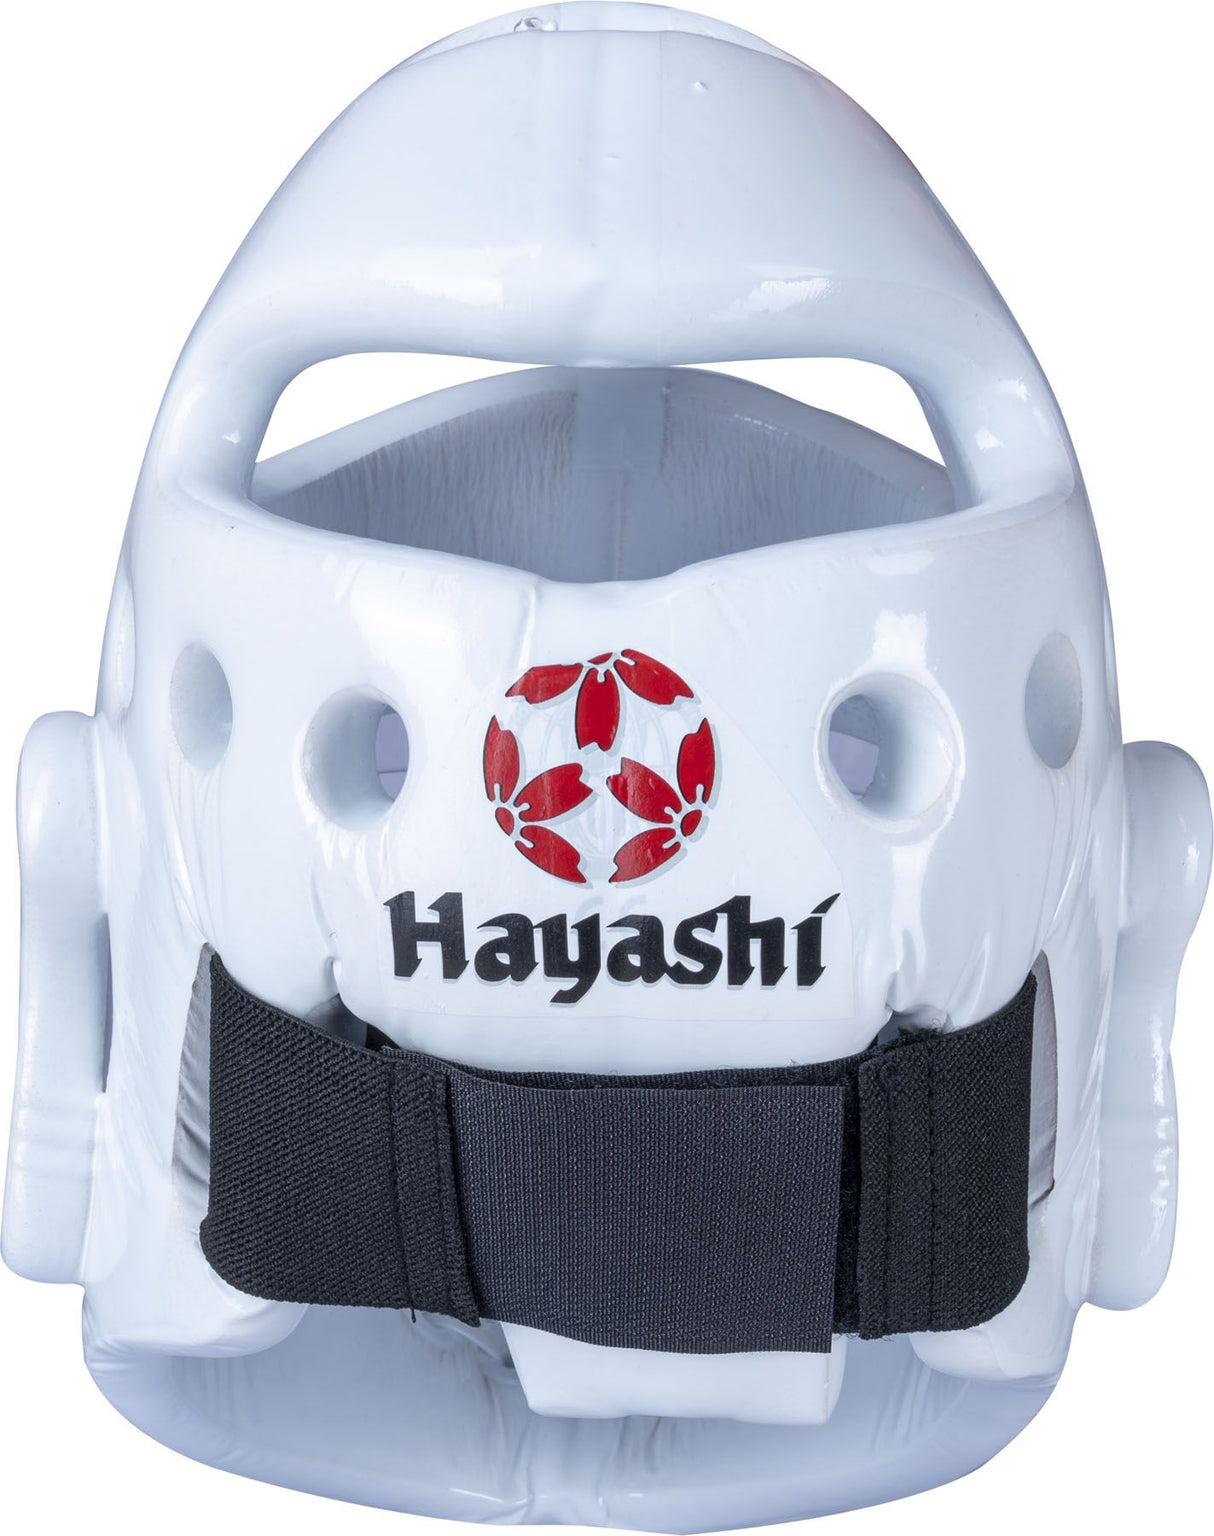 Hayashi Casque WKF Avec Masque - blanc